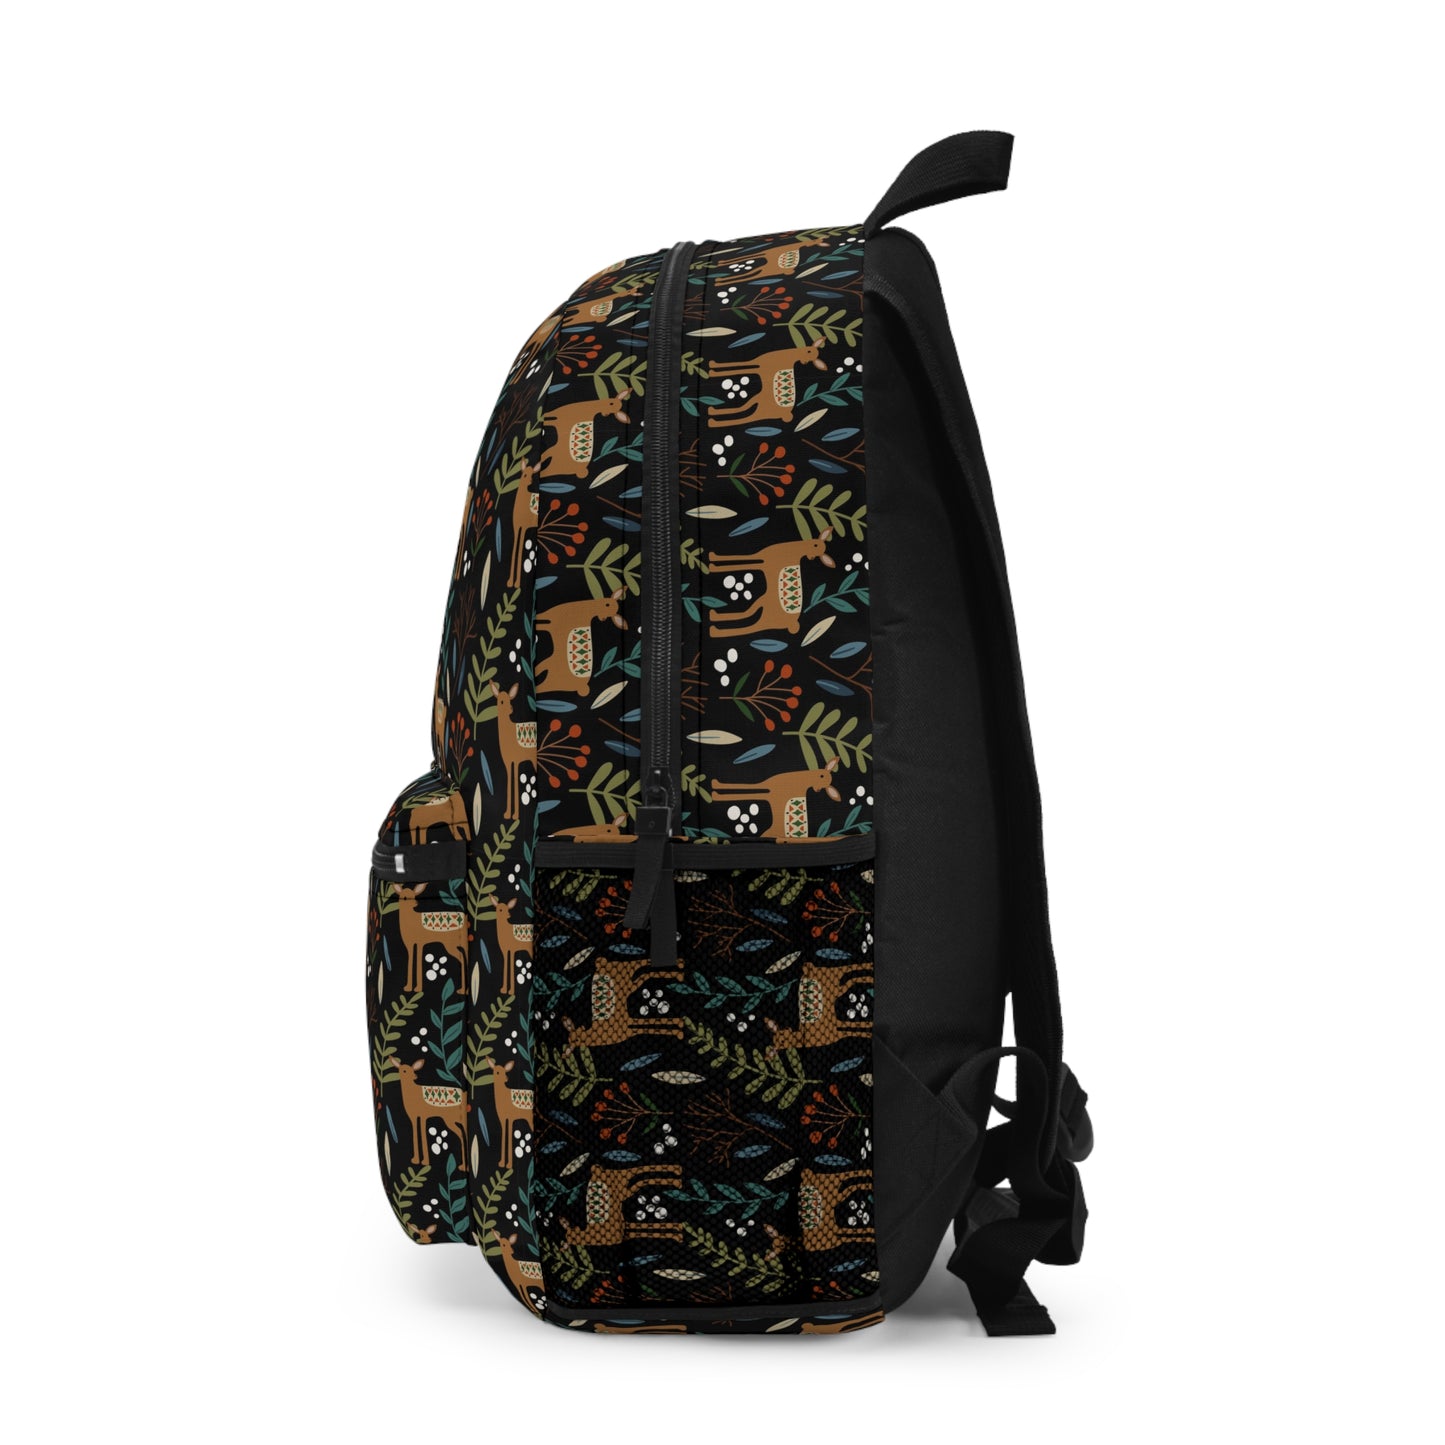 Deer Backpack / Forest Animal Bookbag